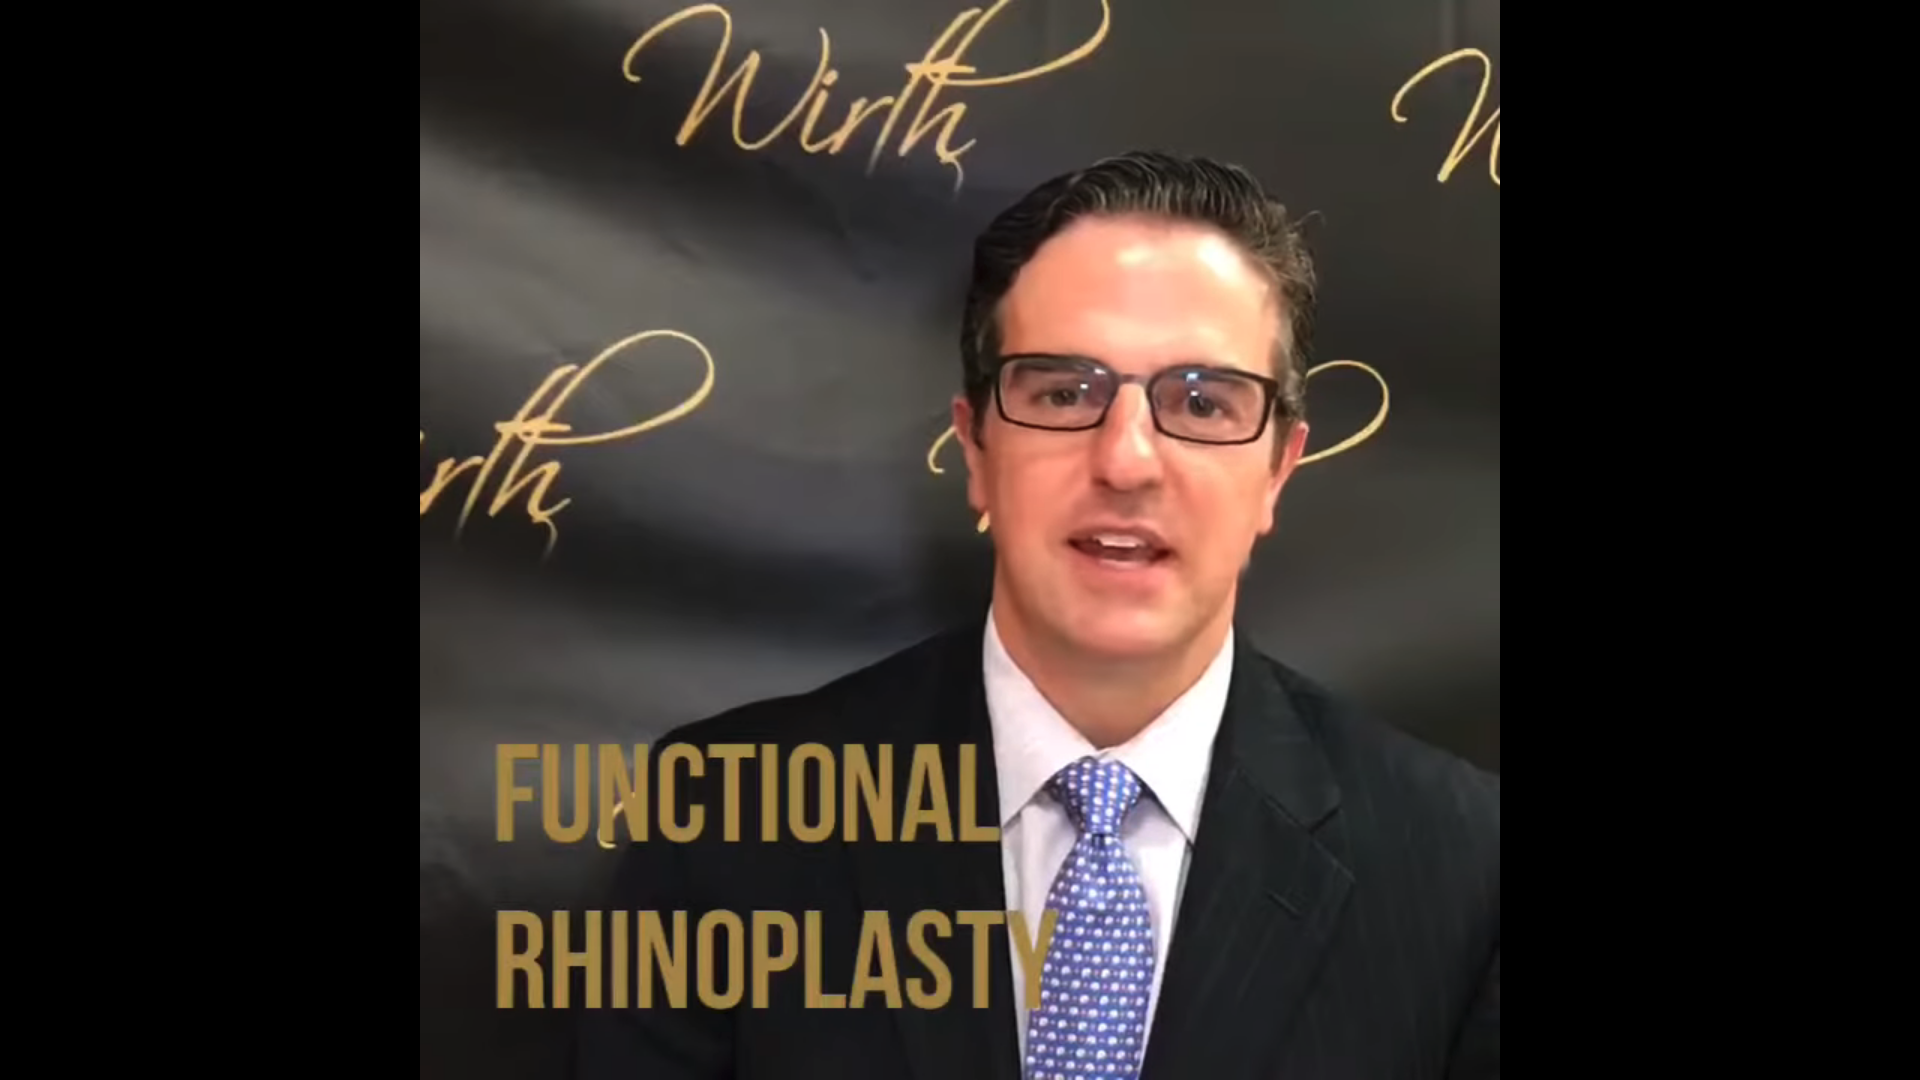 A video still of Dr. Wirth describing functional rhinoplasty